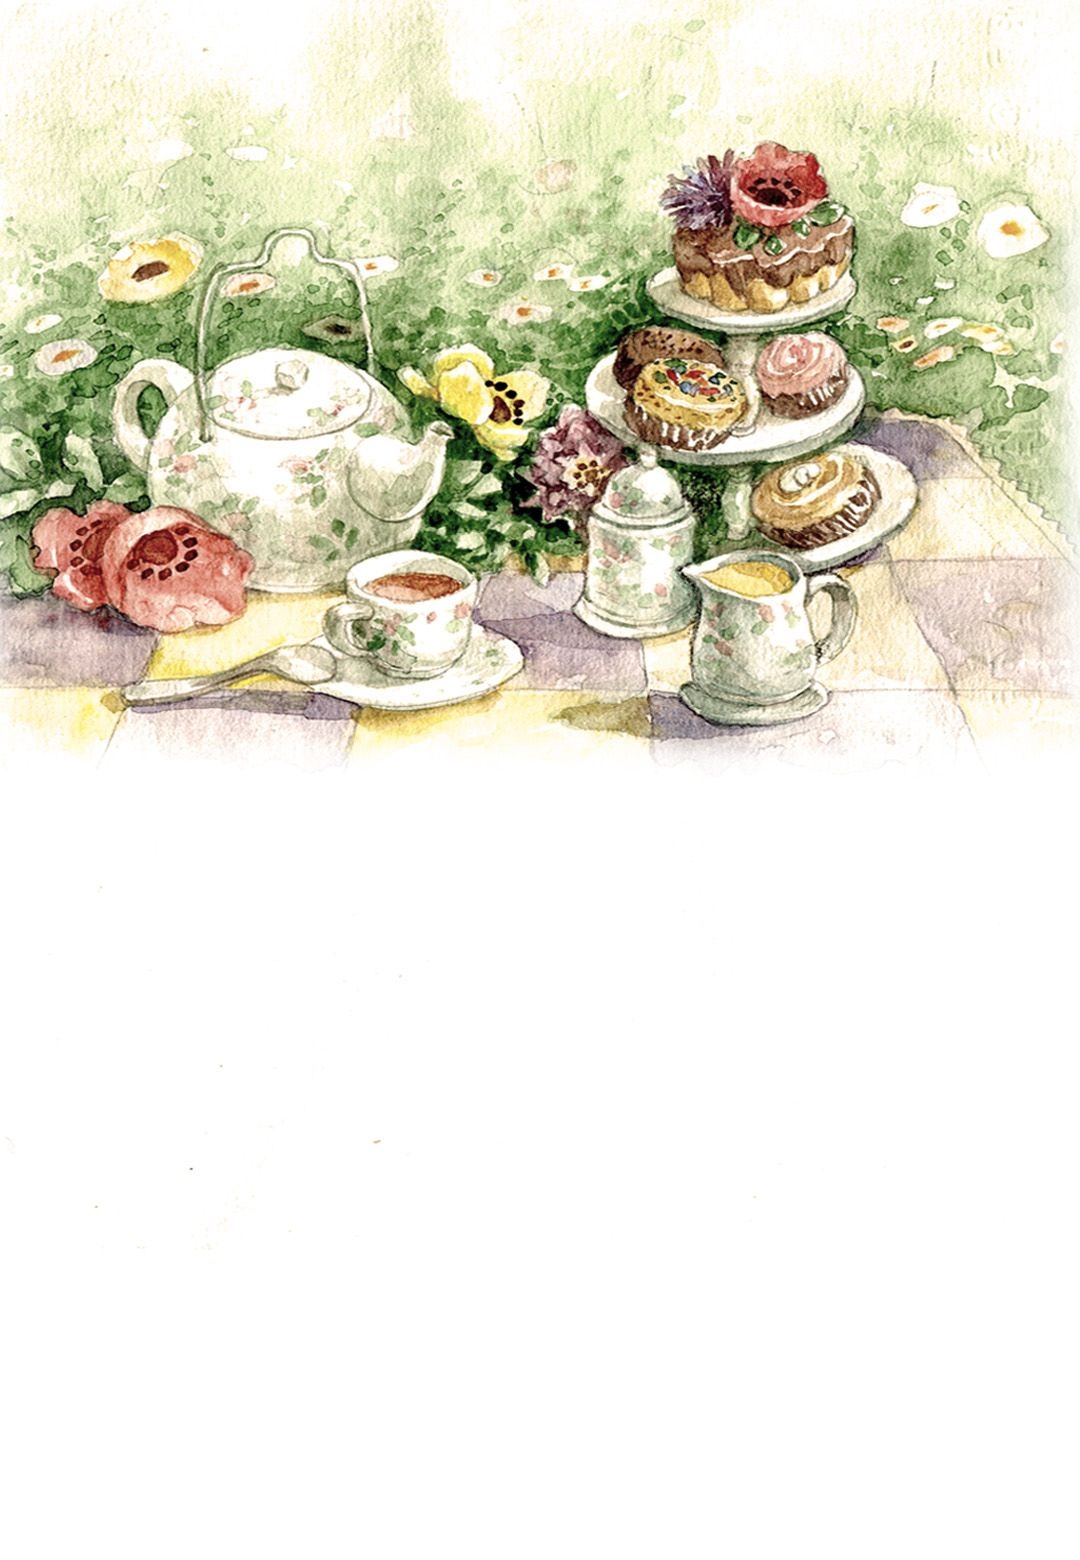 Free Printable Tea Party Invitation | Tea Party Ideas In 2019 - Free Printable Vintage Tea Party Invitations